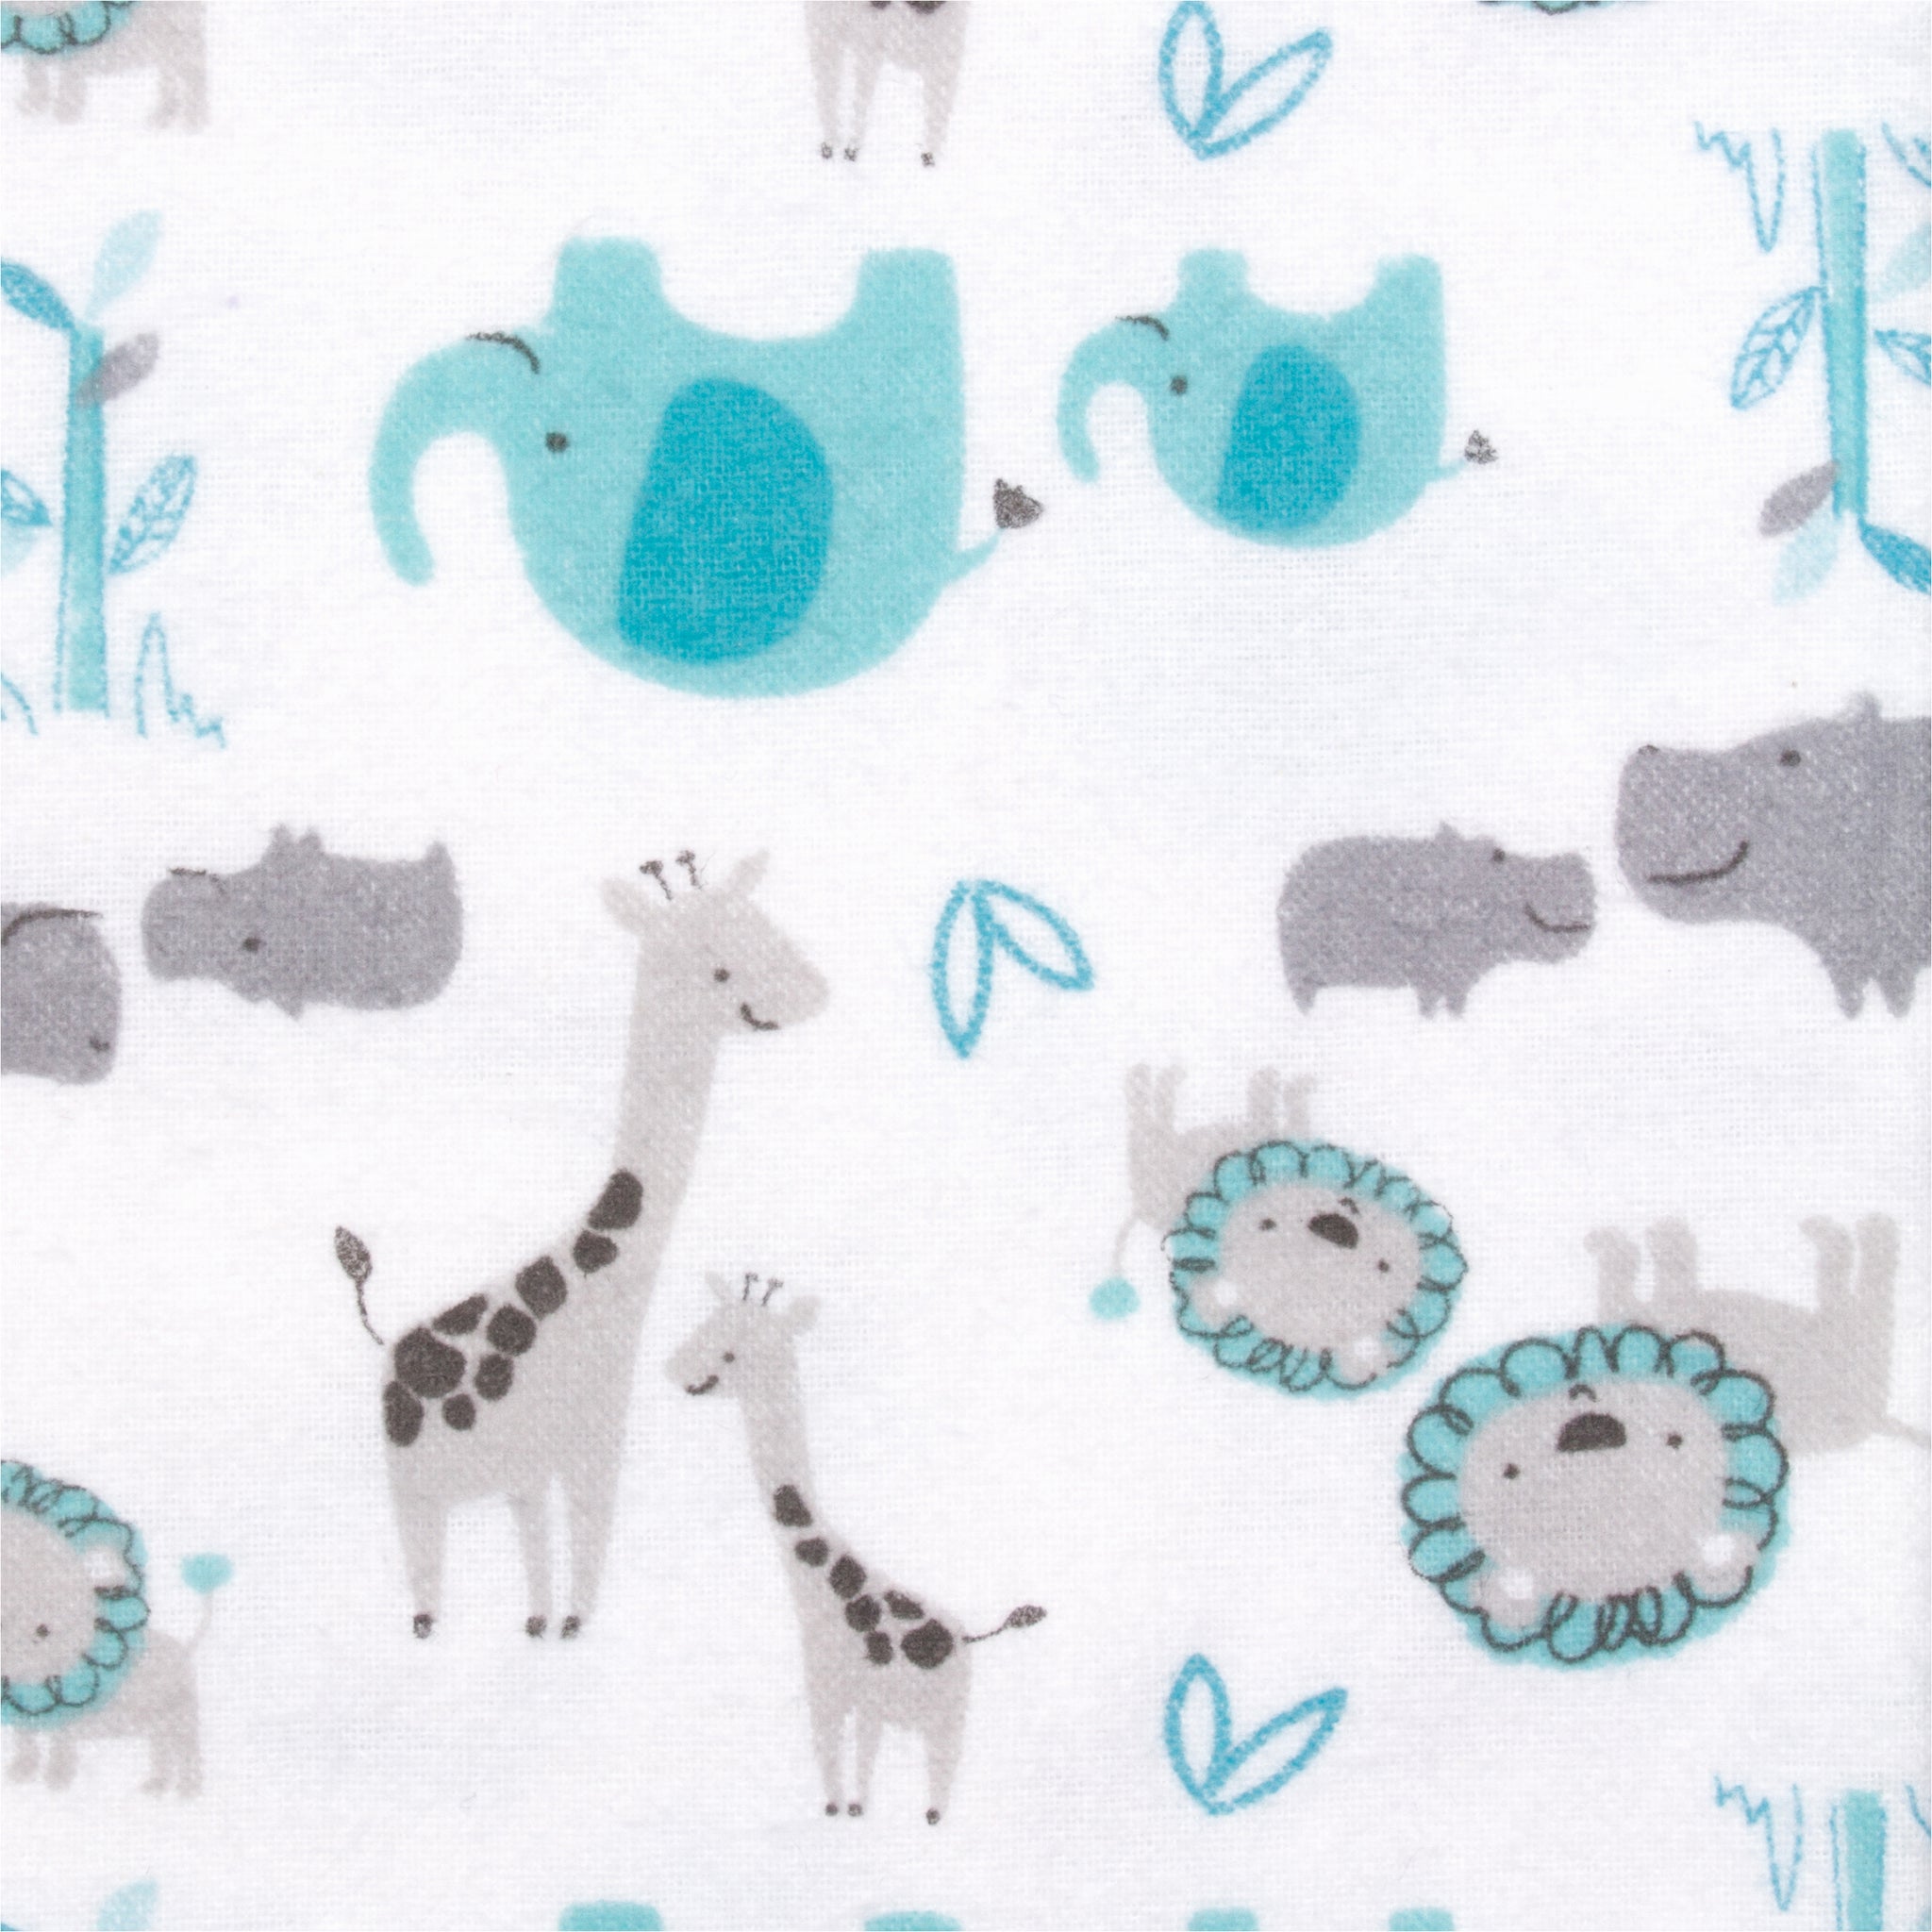 5-Pack Baby Boys Safari Flannel Receiving Blankets-Gerber Childrenswear Wholesale